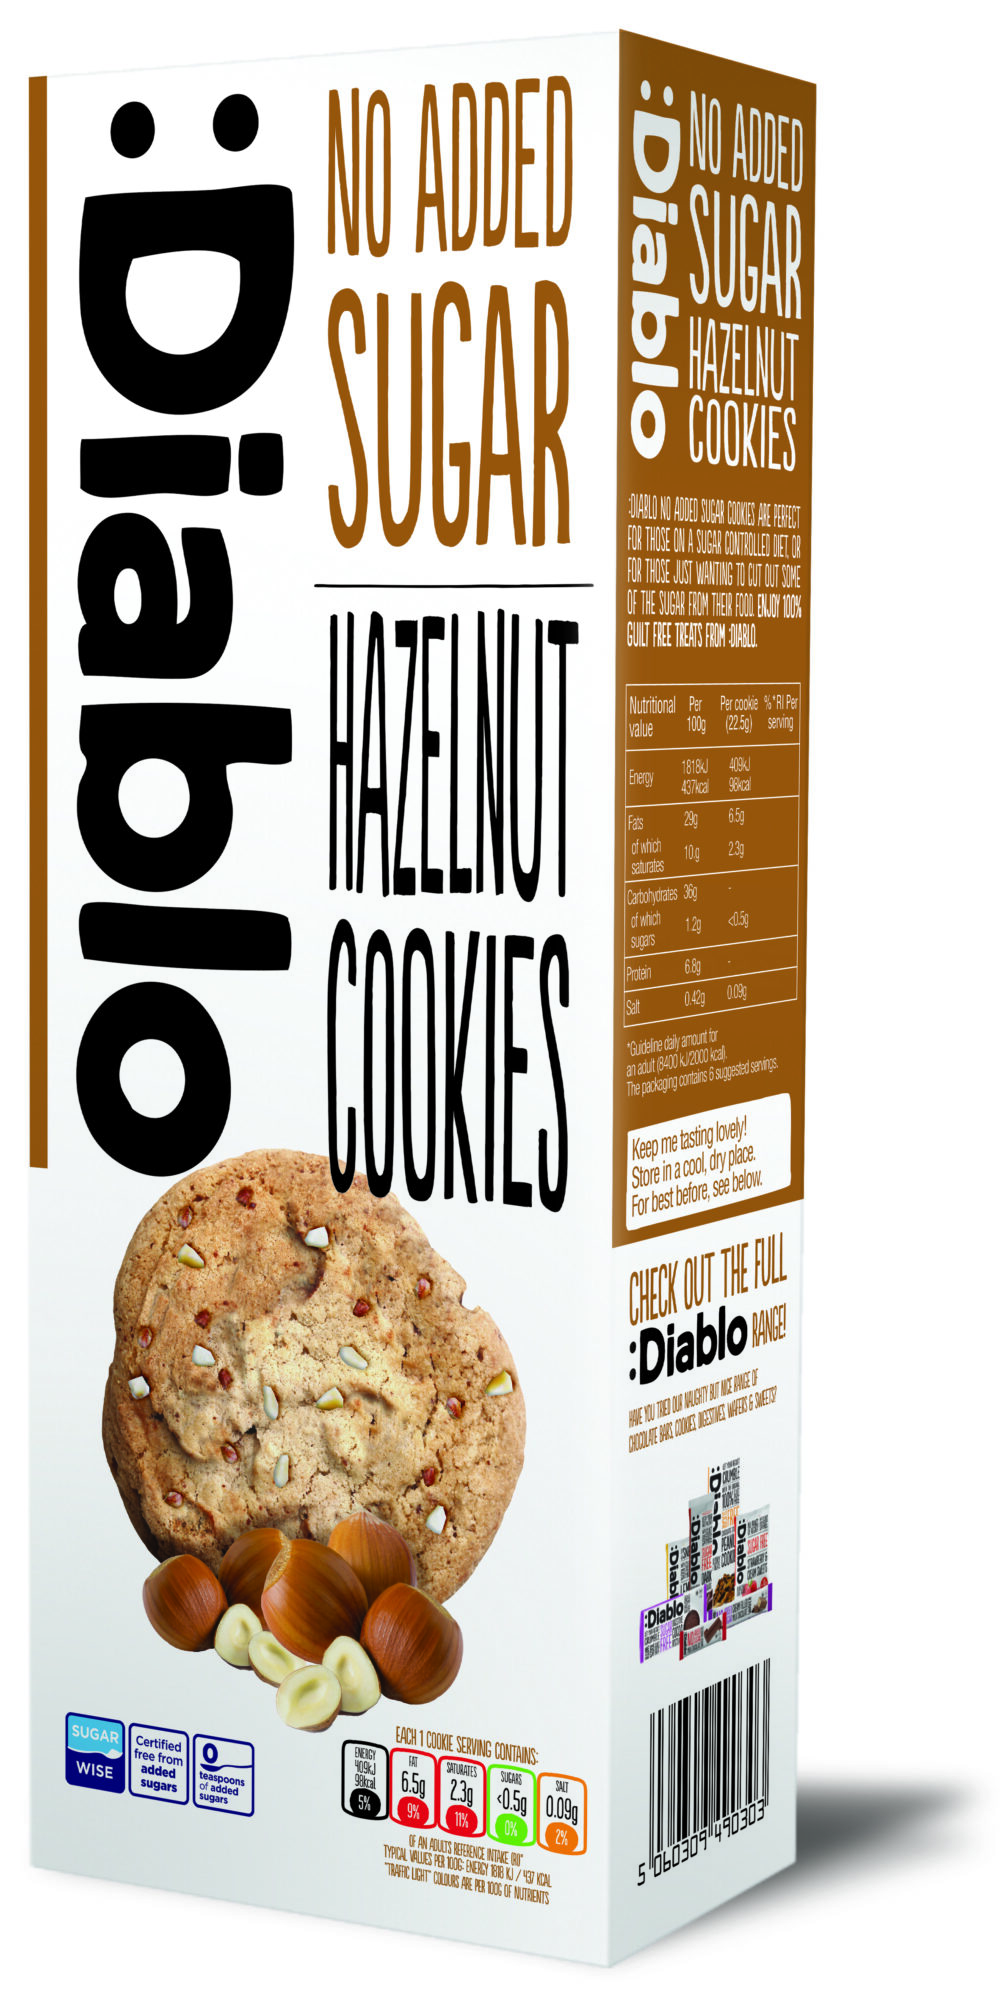 03007AA - New Design Hazelnut Cookies Image